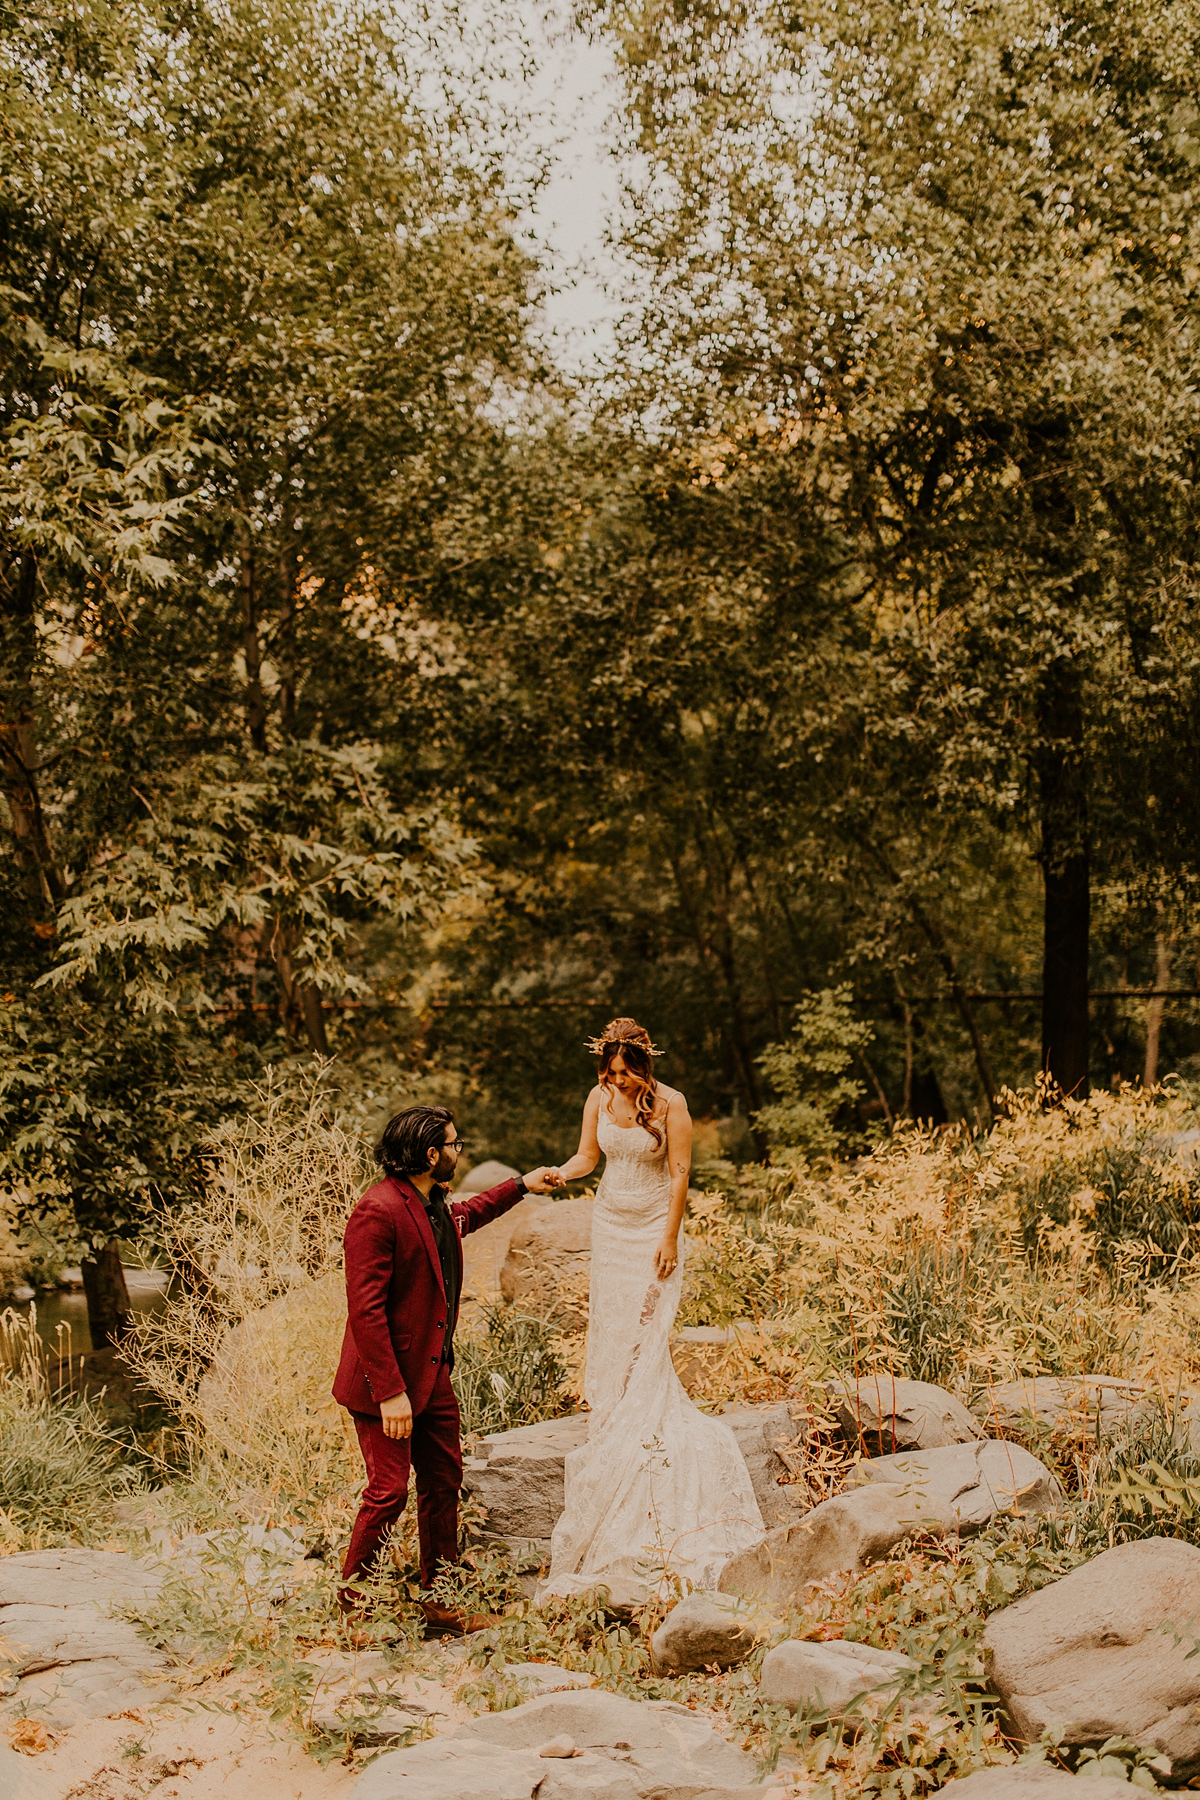 woodsy-intimate-wedding-at-oak-creek-allison-aslater-photography55.jpg